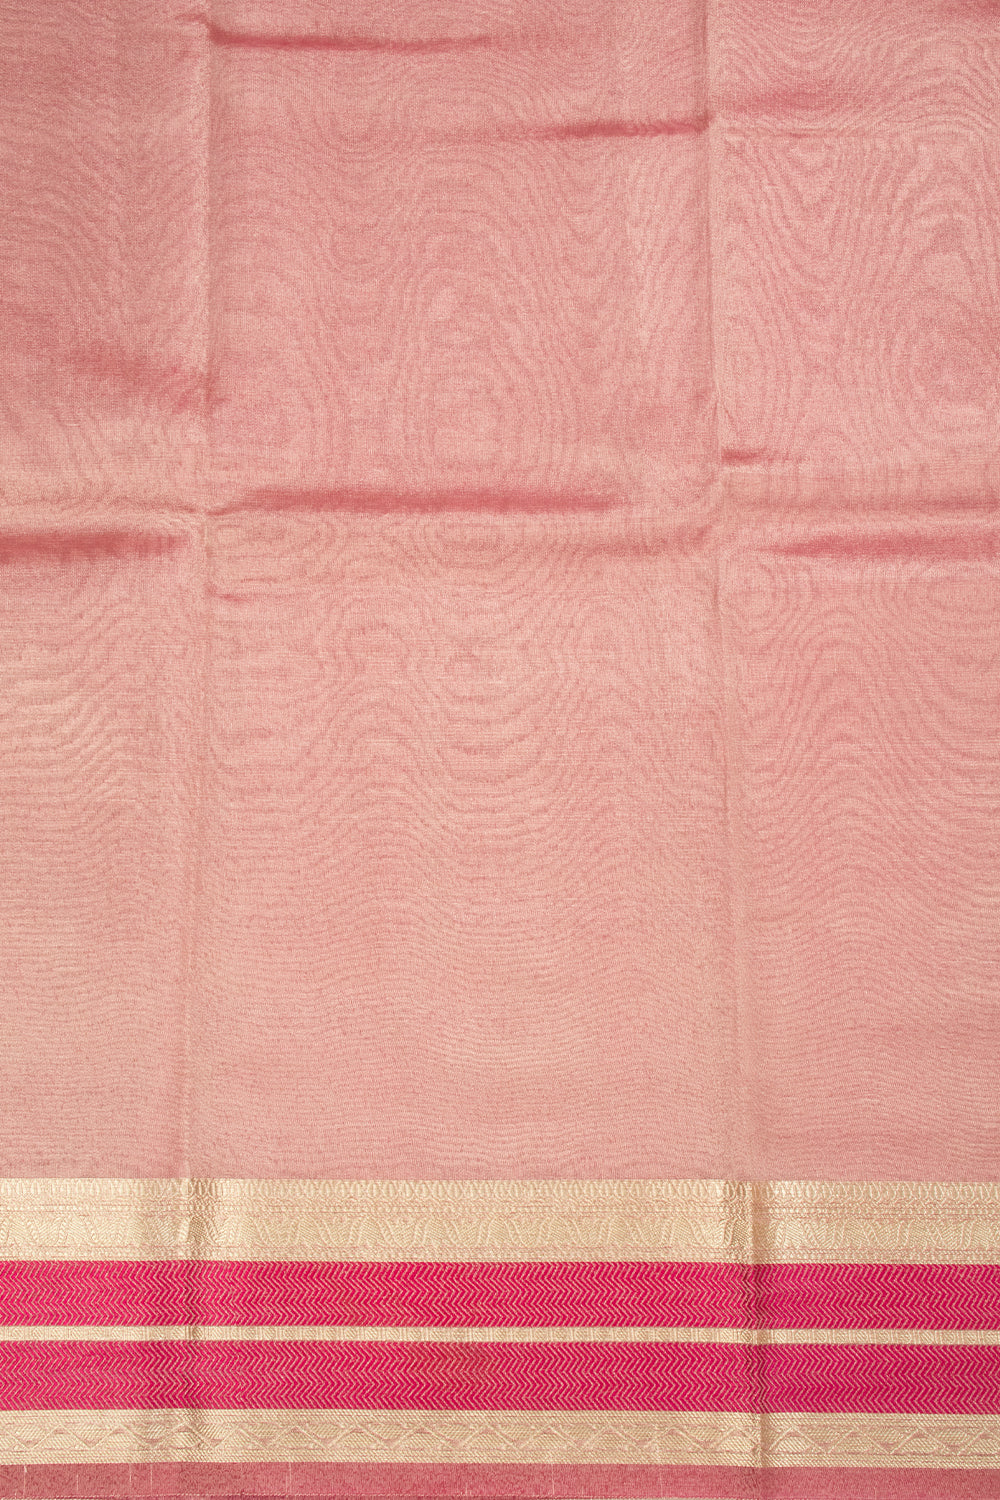 Dual Tone Pink Banarasi Tissue Organza Saree 10067886